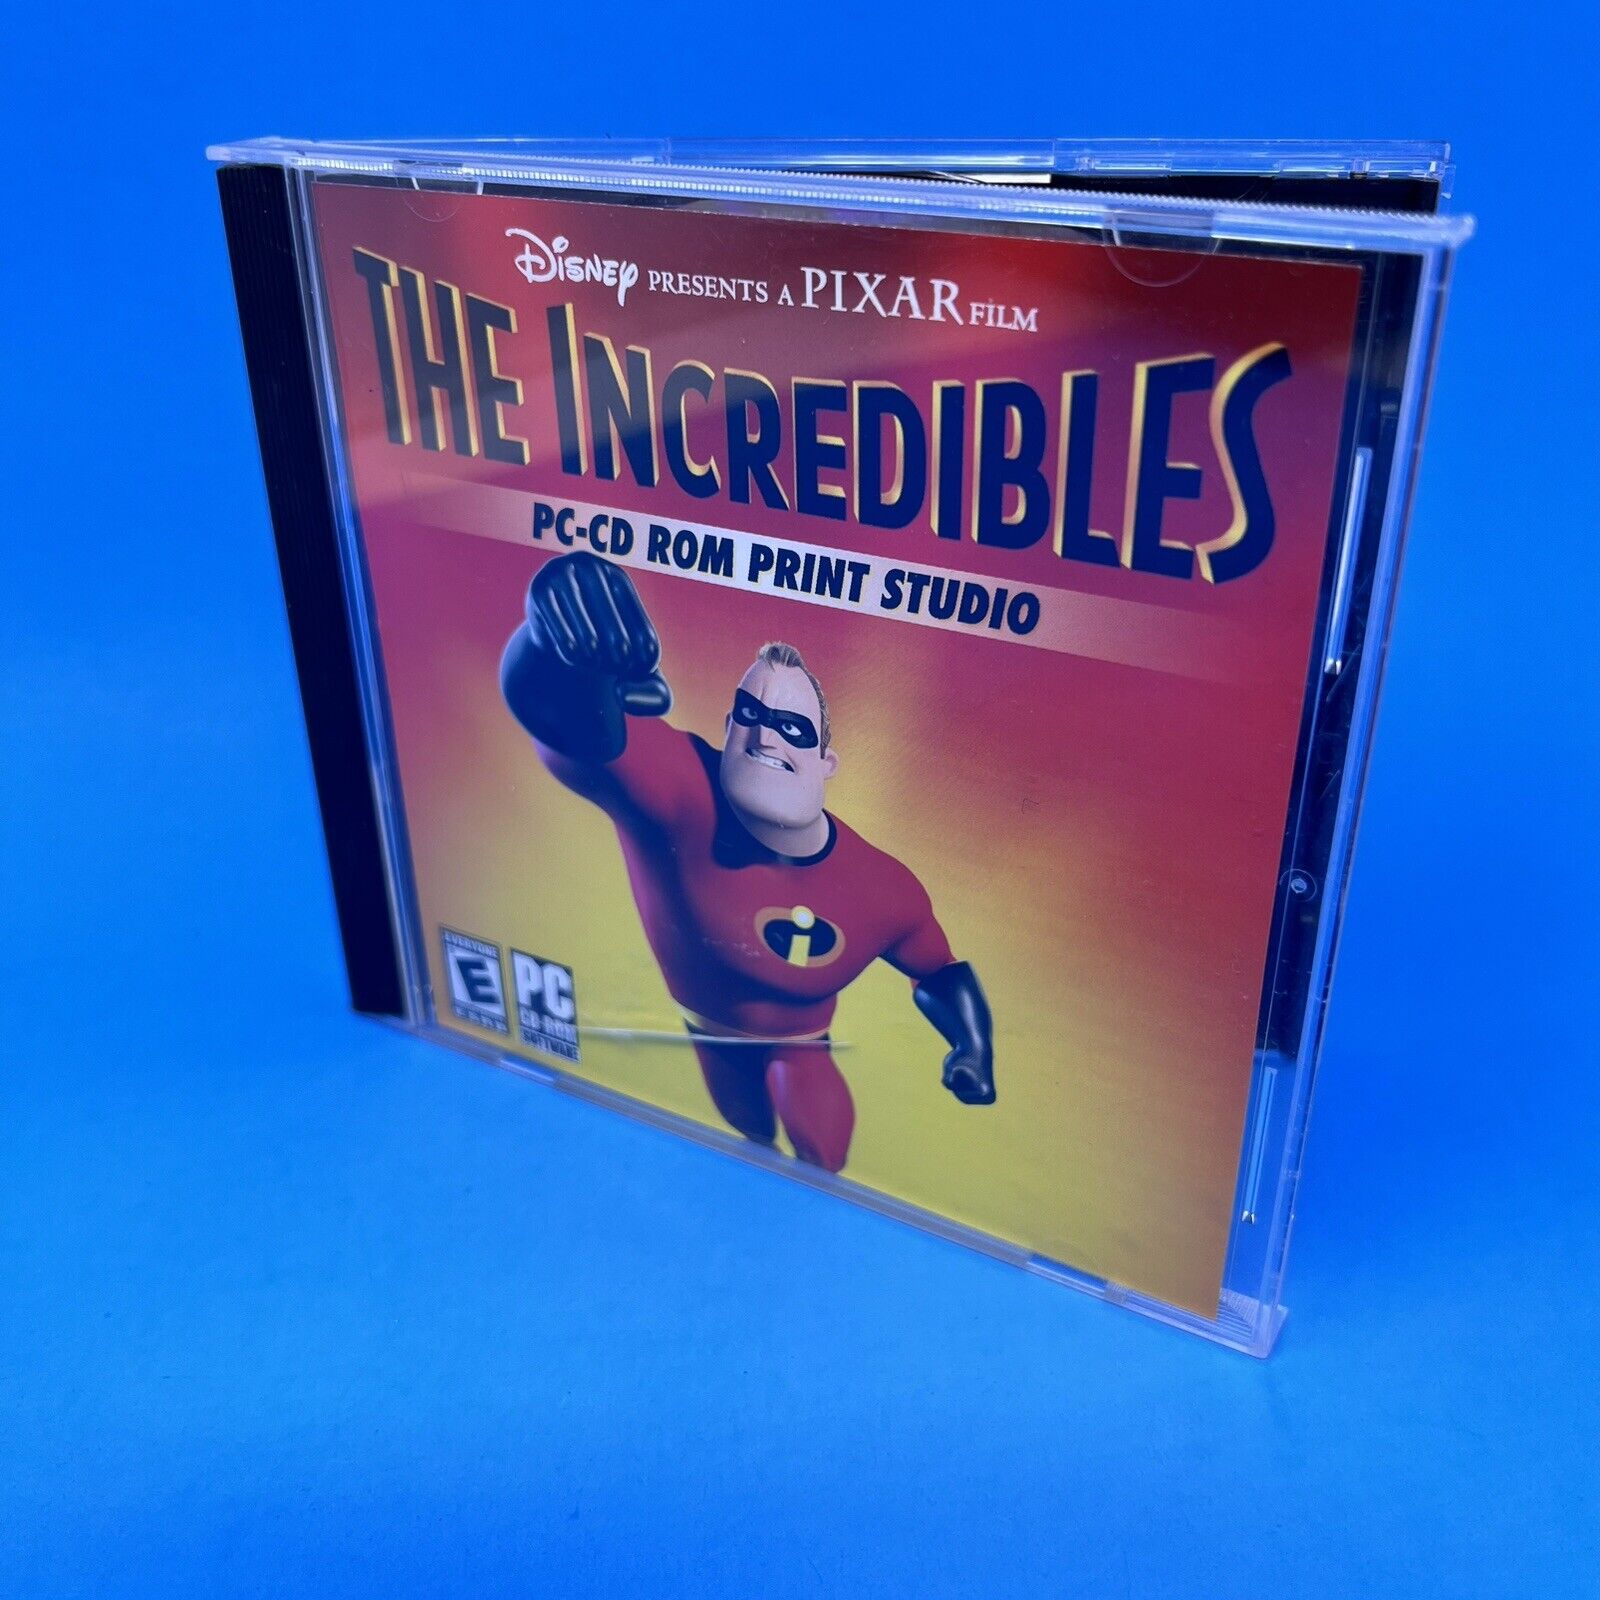 The Incredibles PC-CD ROM Print Studio Disney Pixar Computer Software